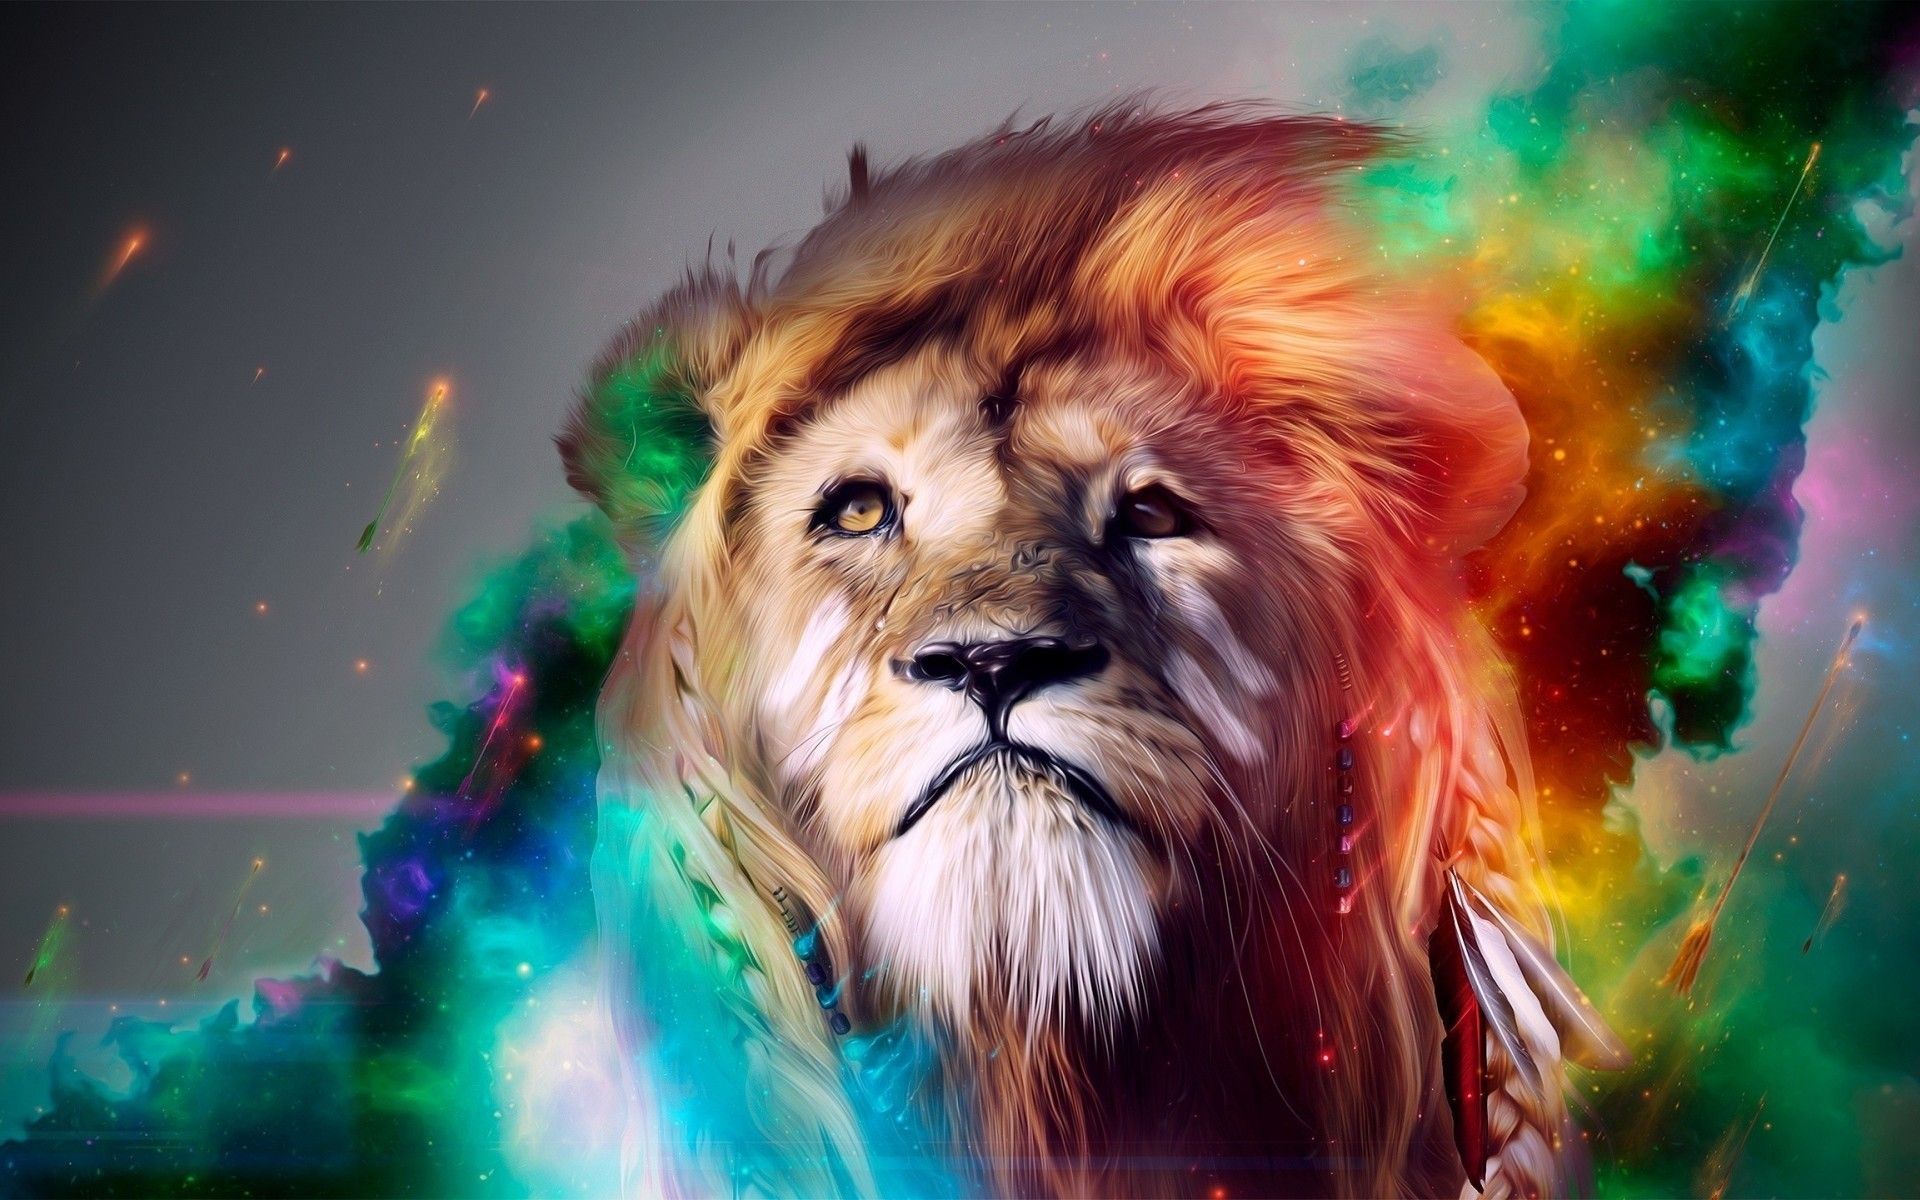 Rainbow Lion Wallpapermillion Wallpaper.com